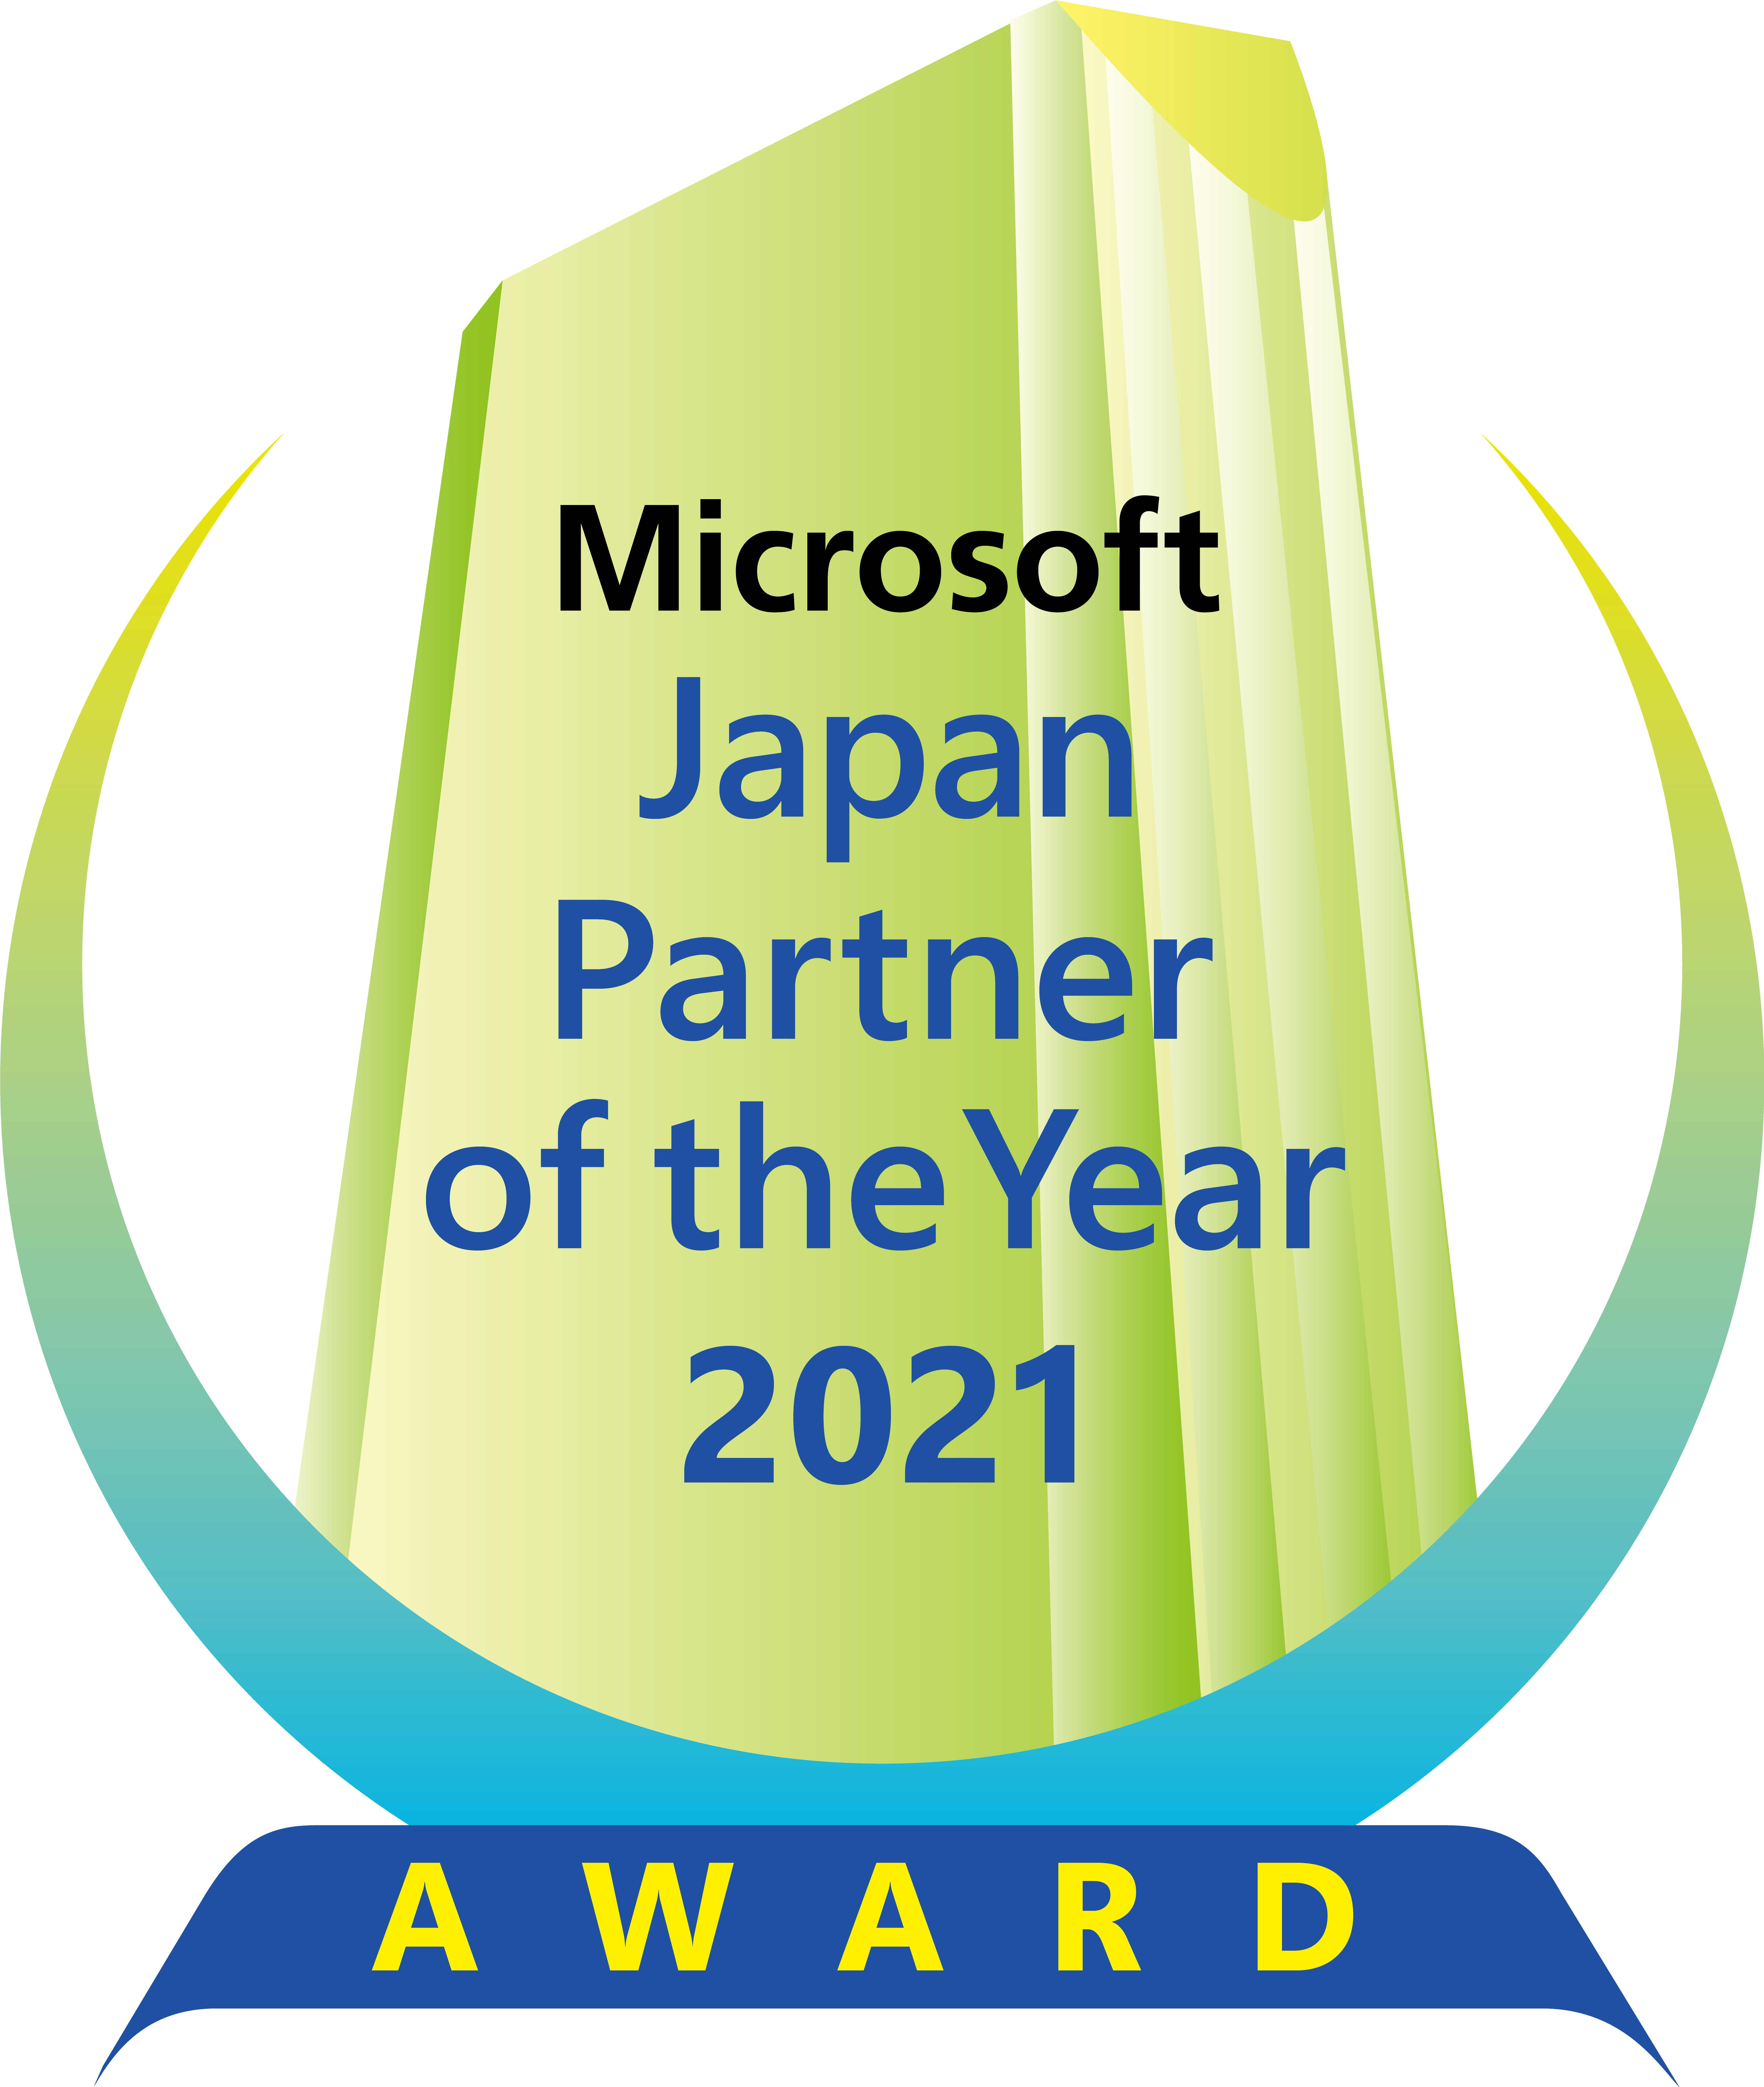 Microsoft Japan Partner of the Year 2021